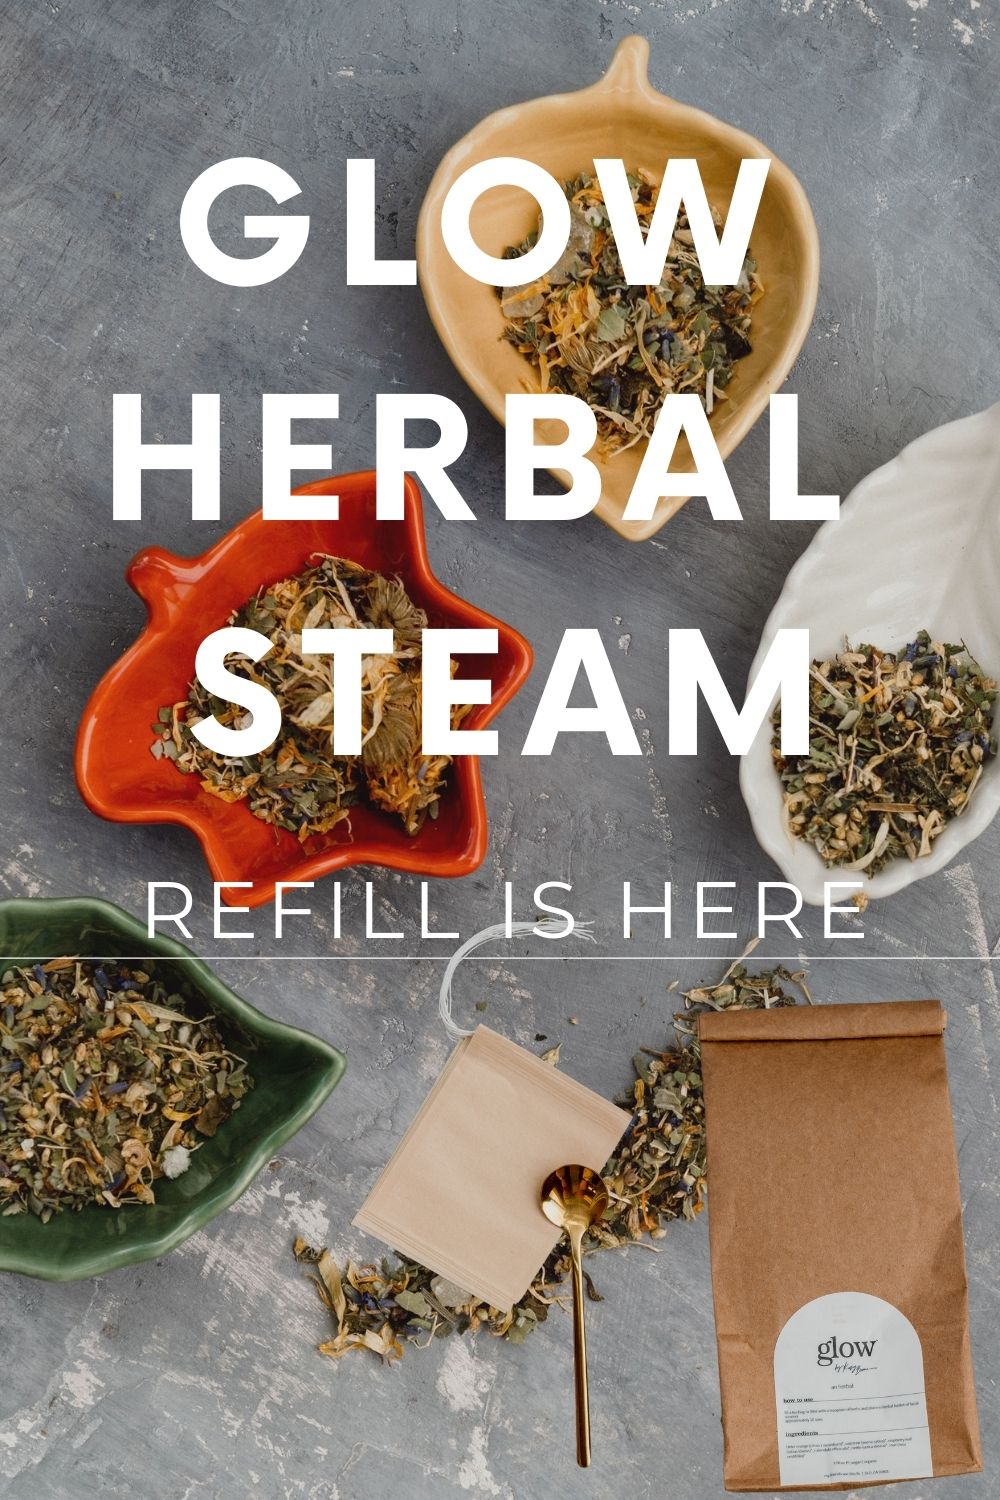 Glow Herbal Steam Refill is HERE!